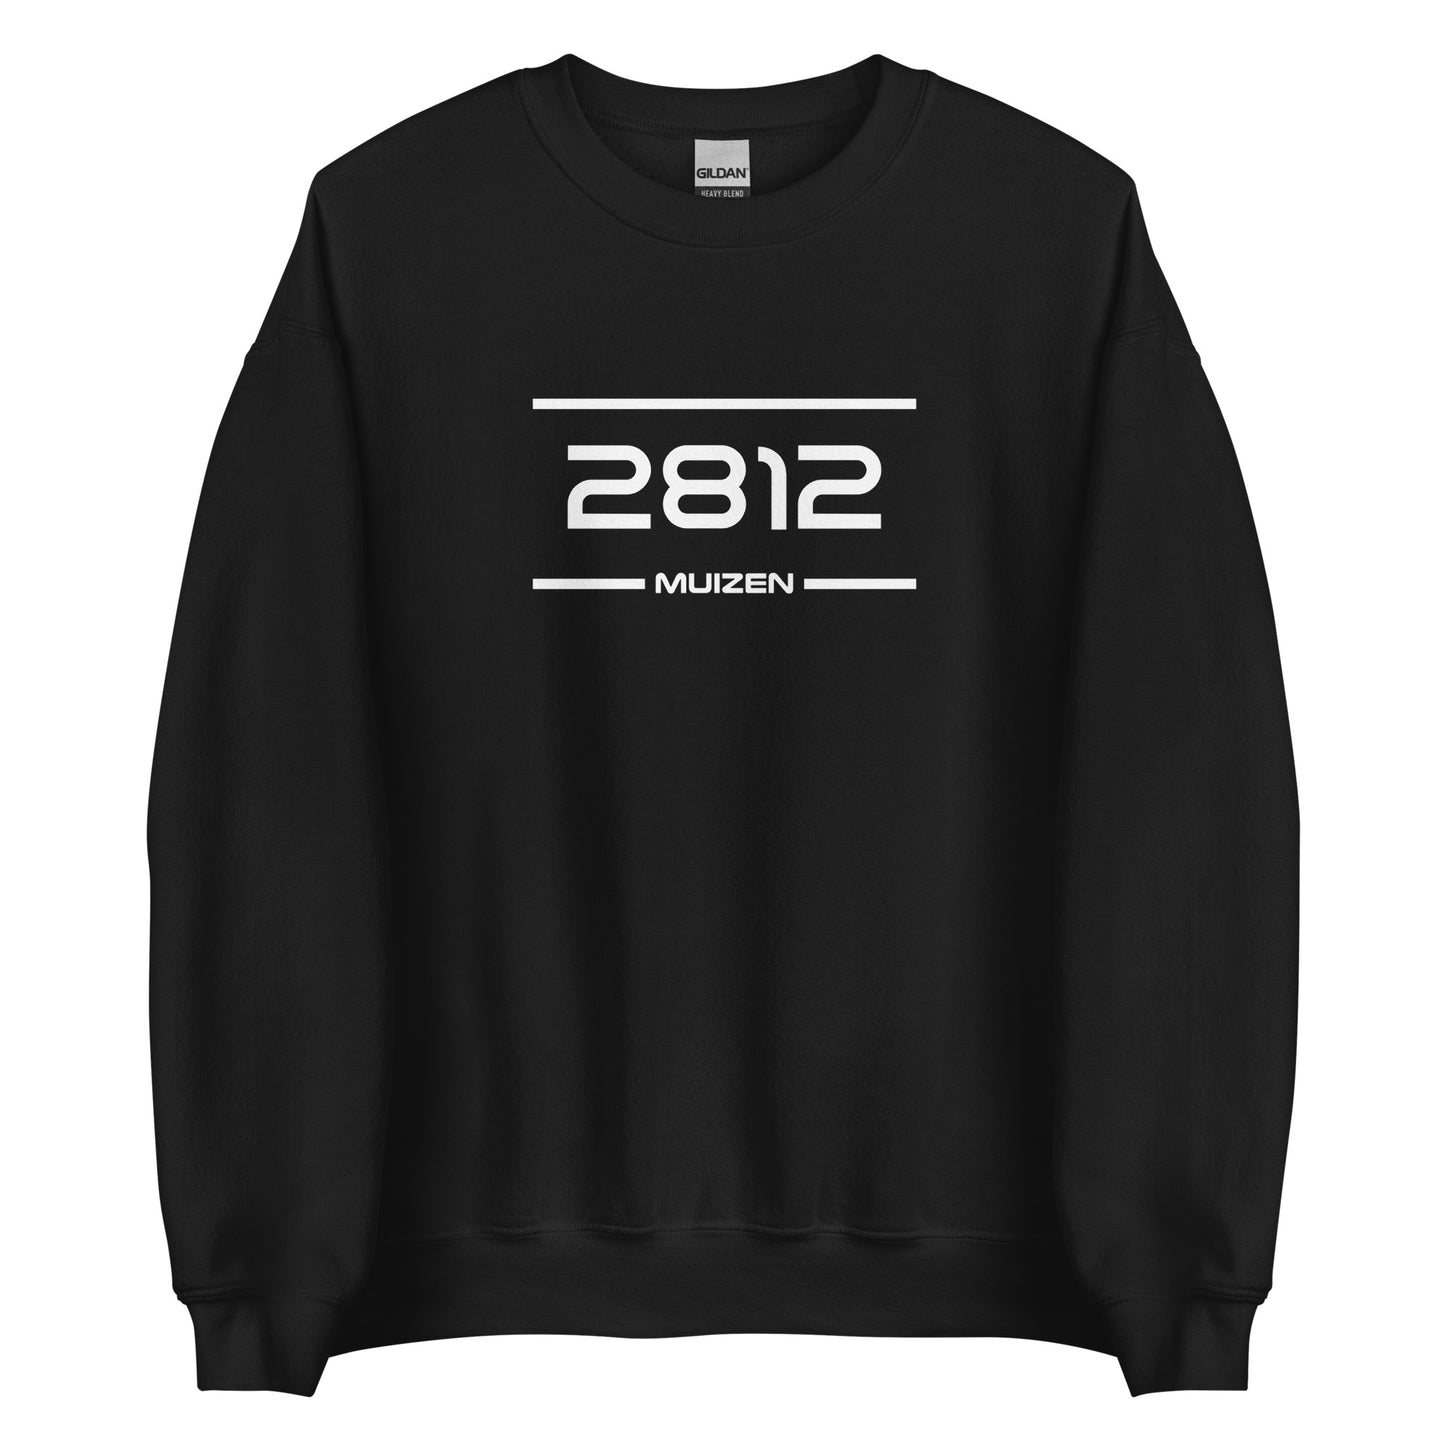 Sweater - 2812 - Muizen (M/V)